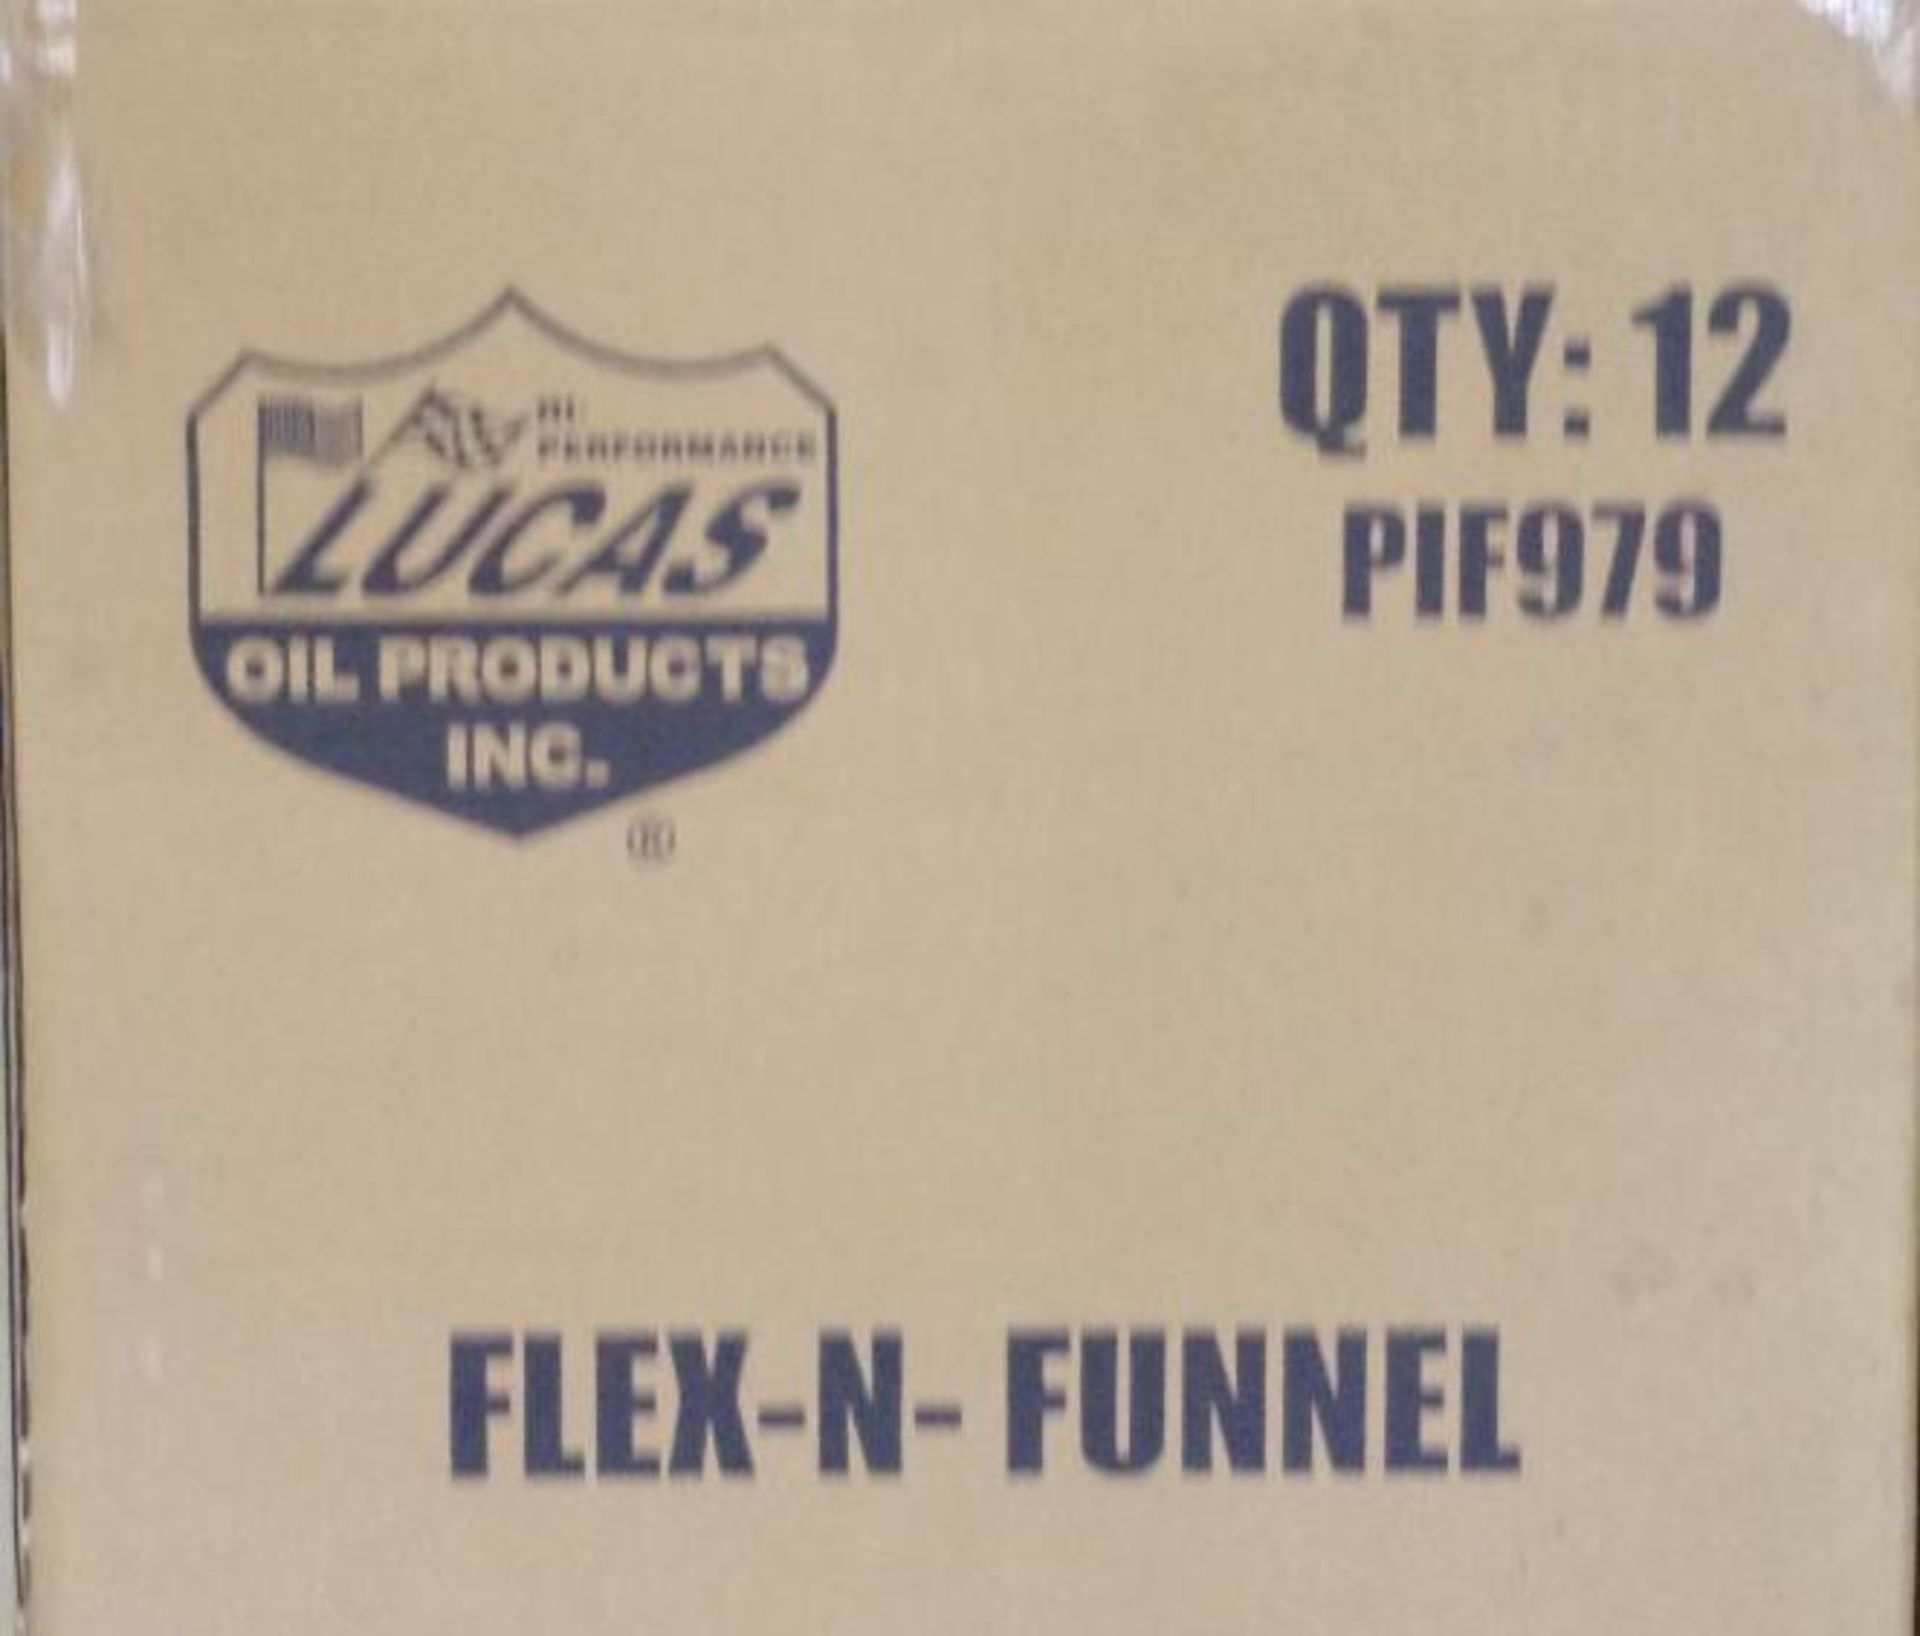 [60] LUCAS Flex-N-Funnels M/N PIF979 (5 Cases of 12) - Image 4 of 5